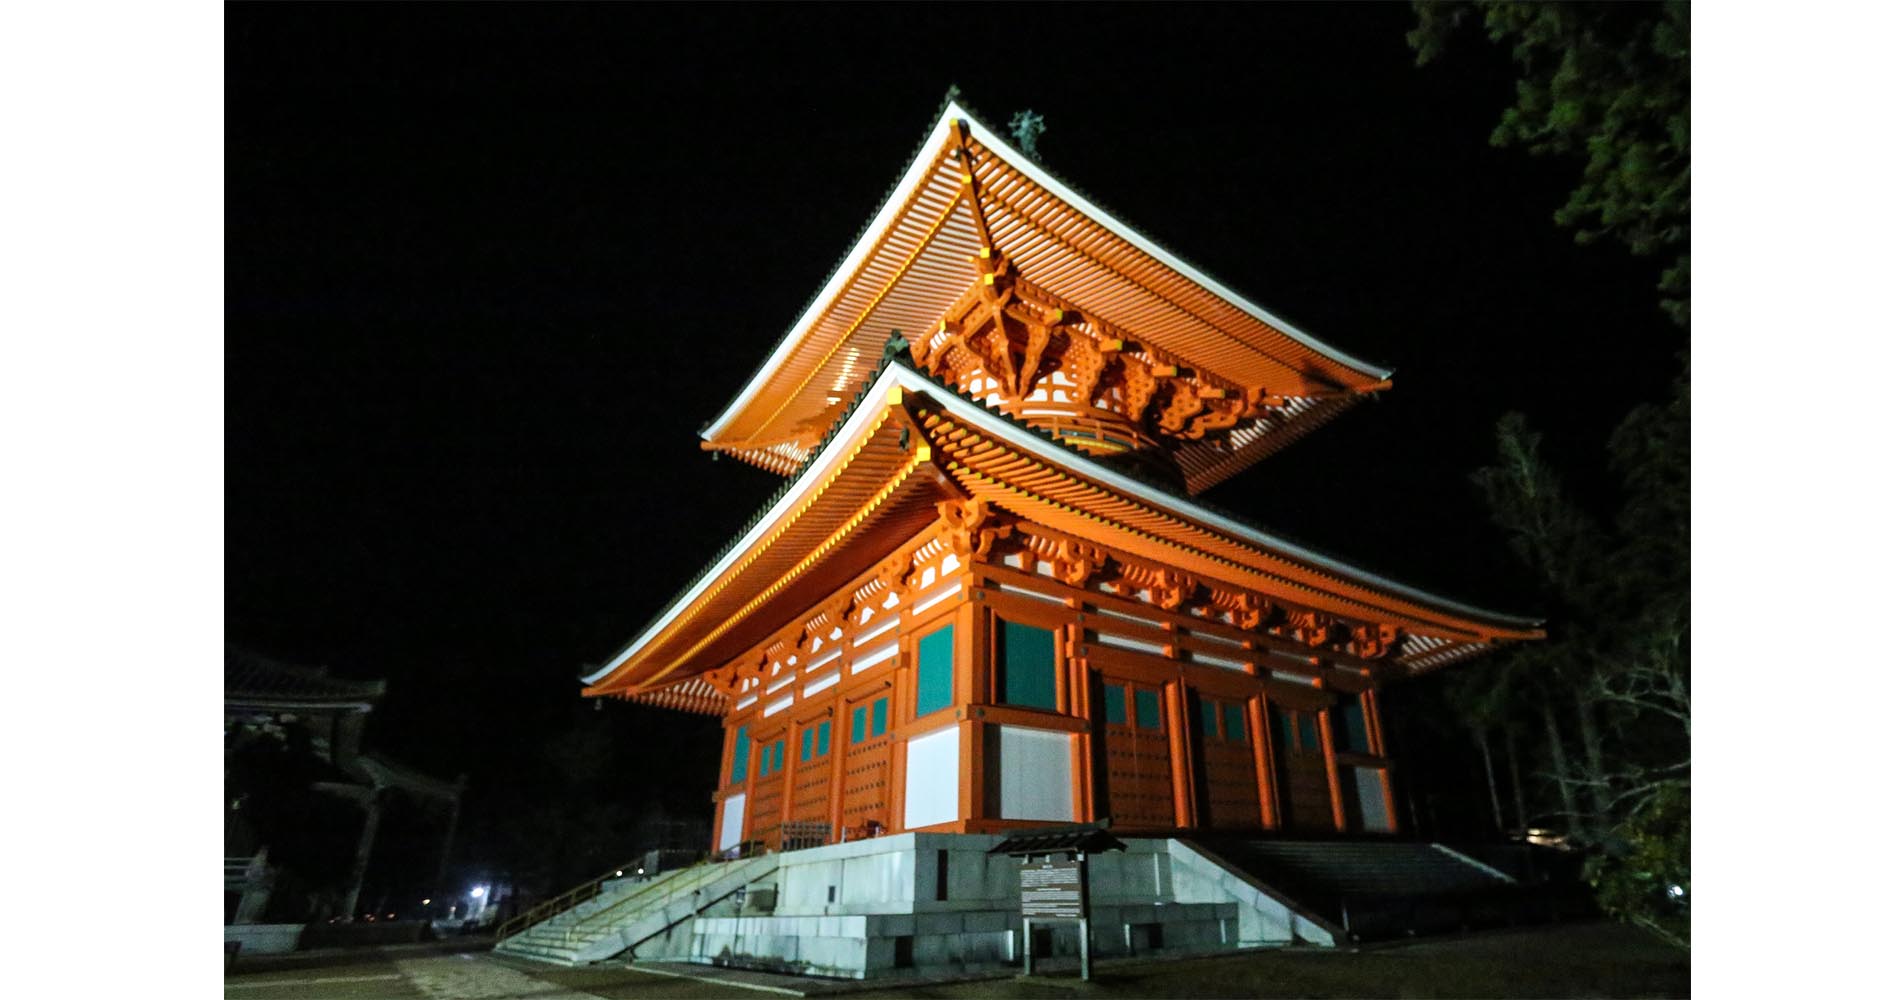 La grande pagode de nuit